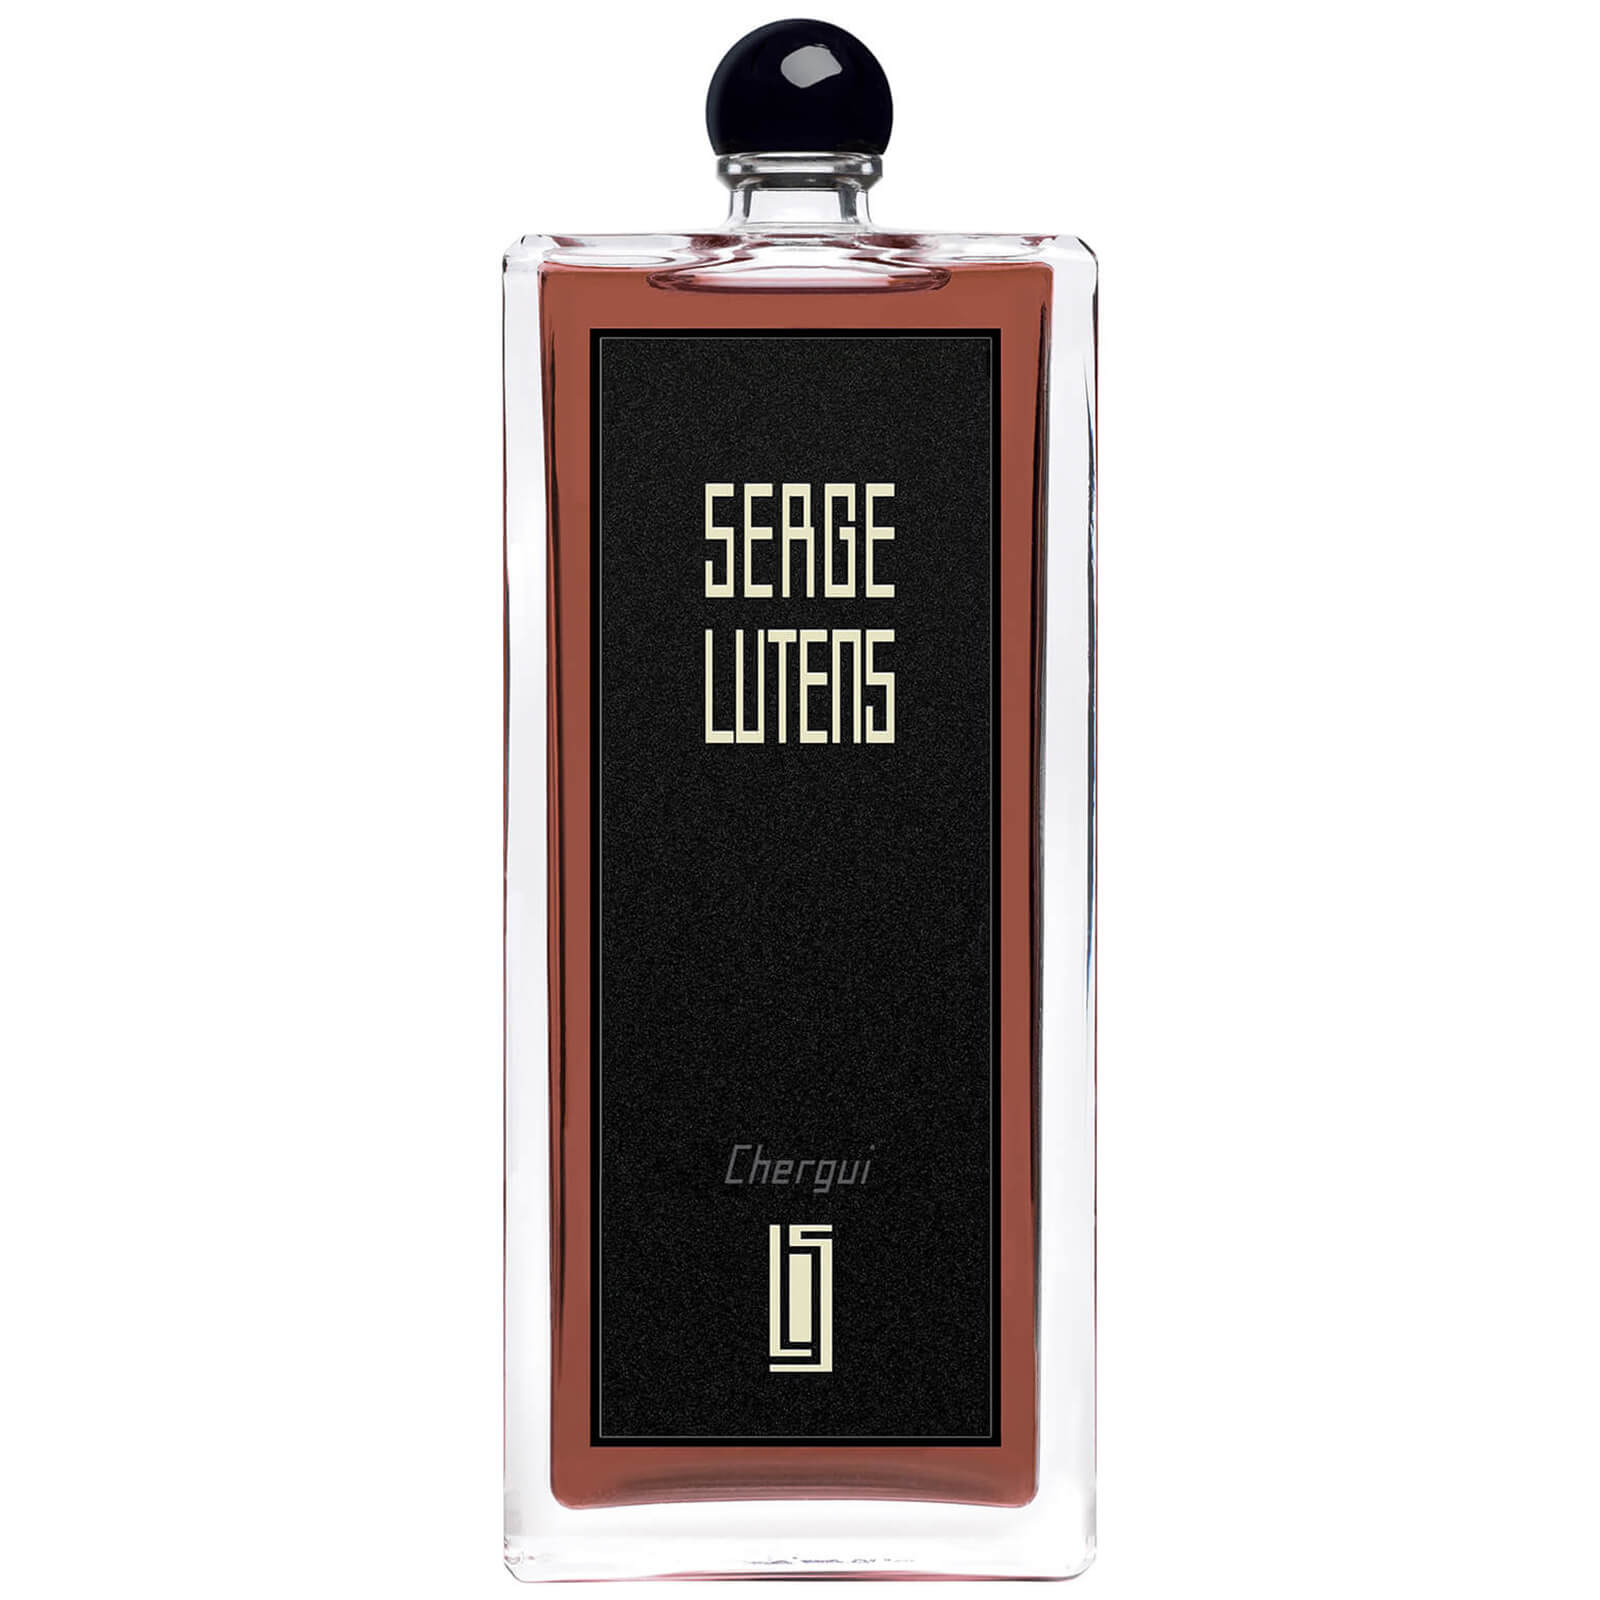 Serge Lutens Chergui Eau de Parfum - 100ml von Serge Lutens